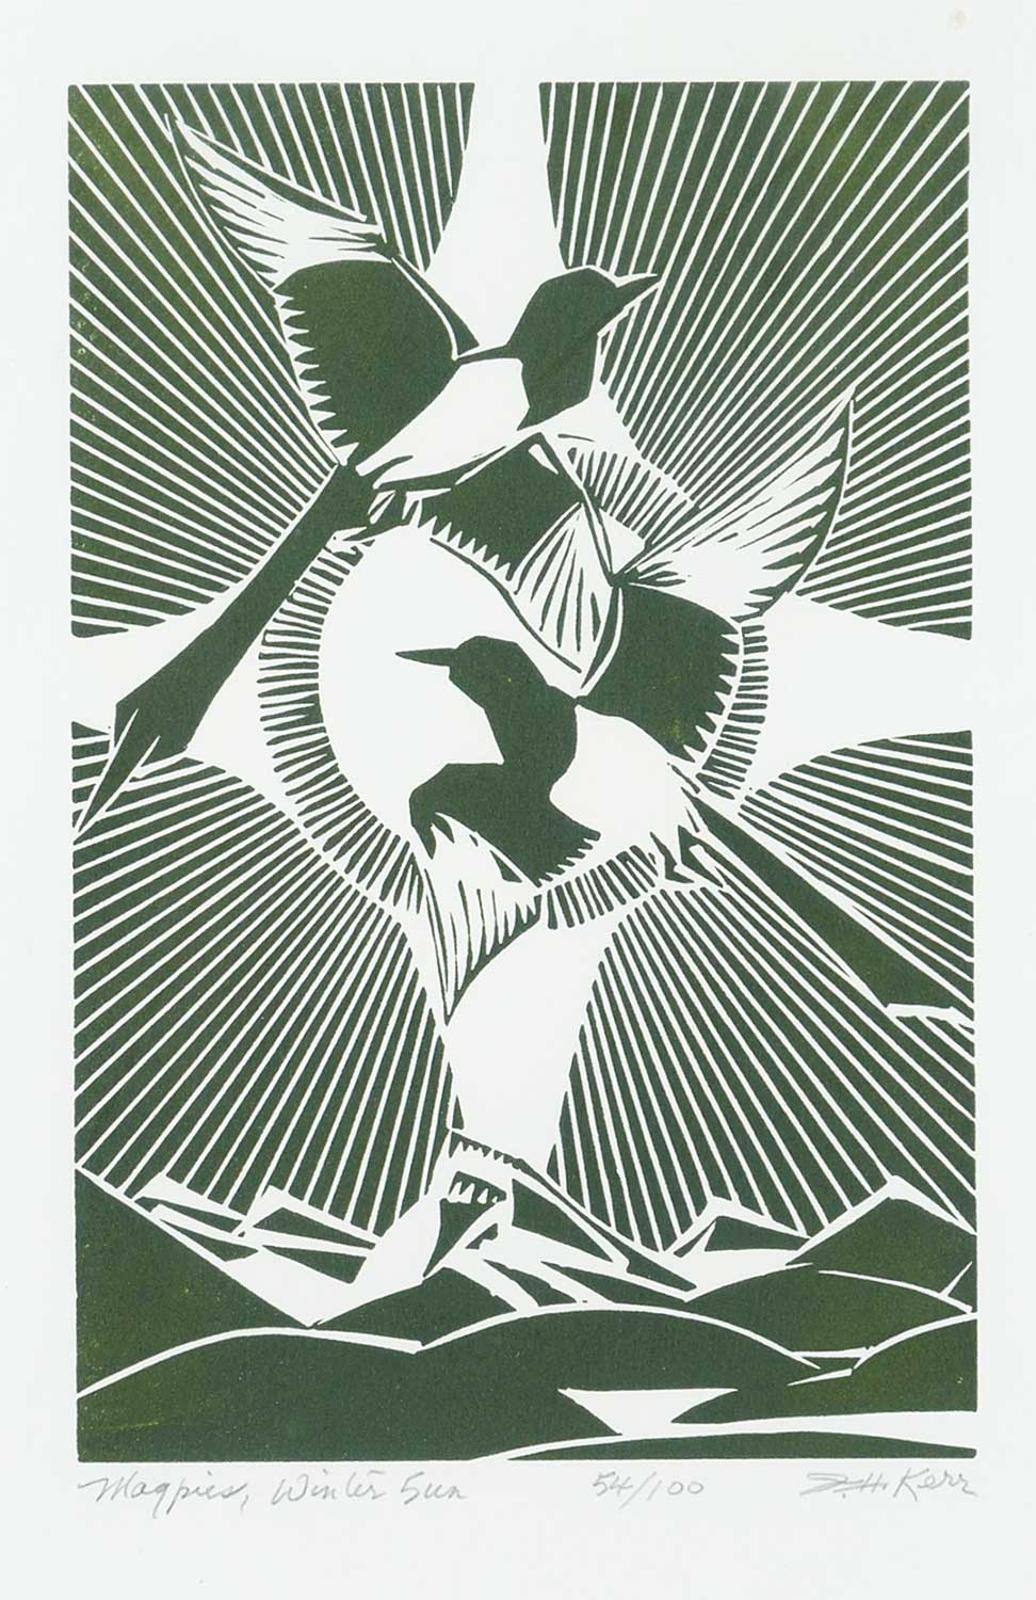 Illingworth Holey (Buck) Kerr (1905-1989) - Magpies, Winter Sun  #54/100